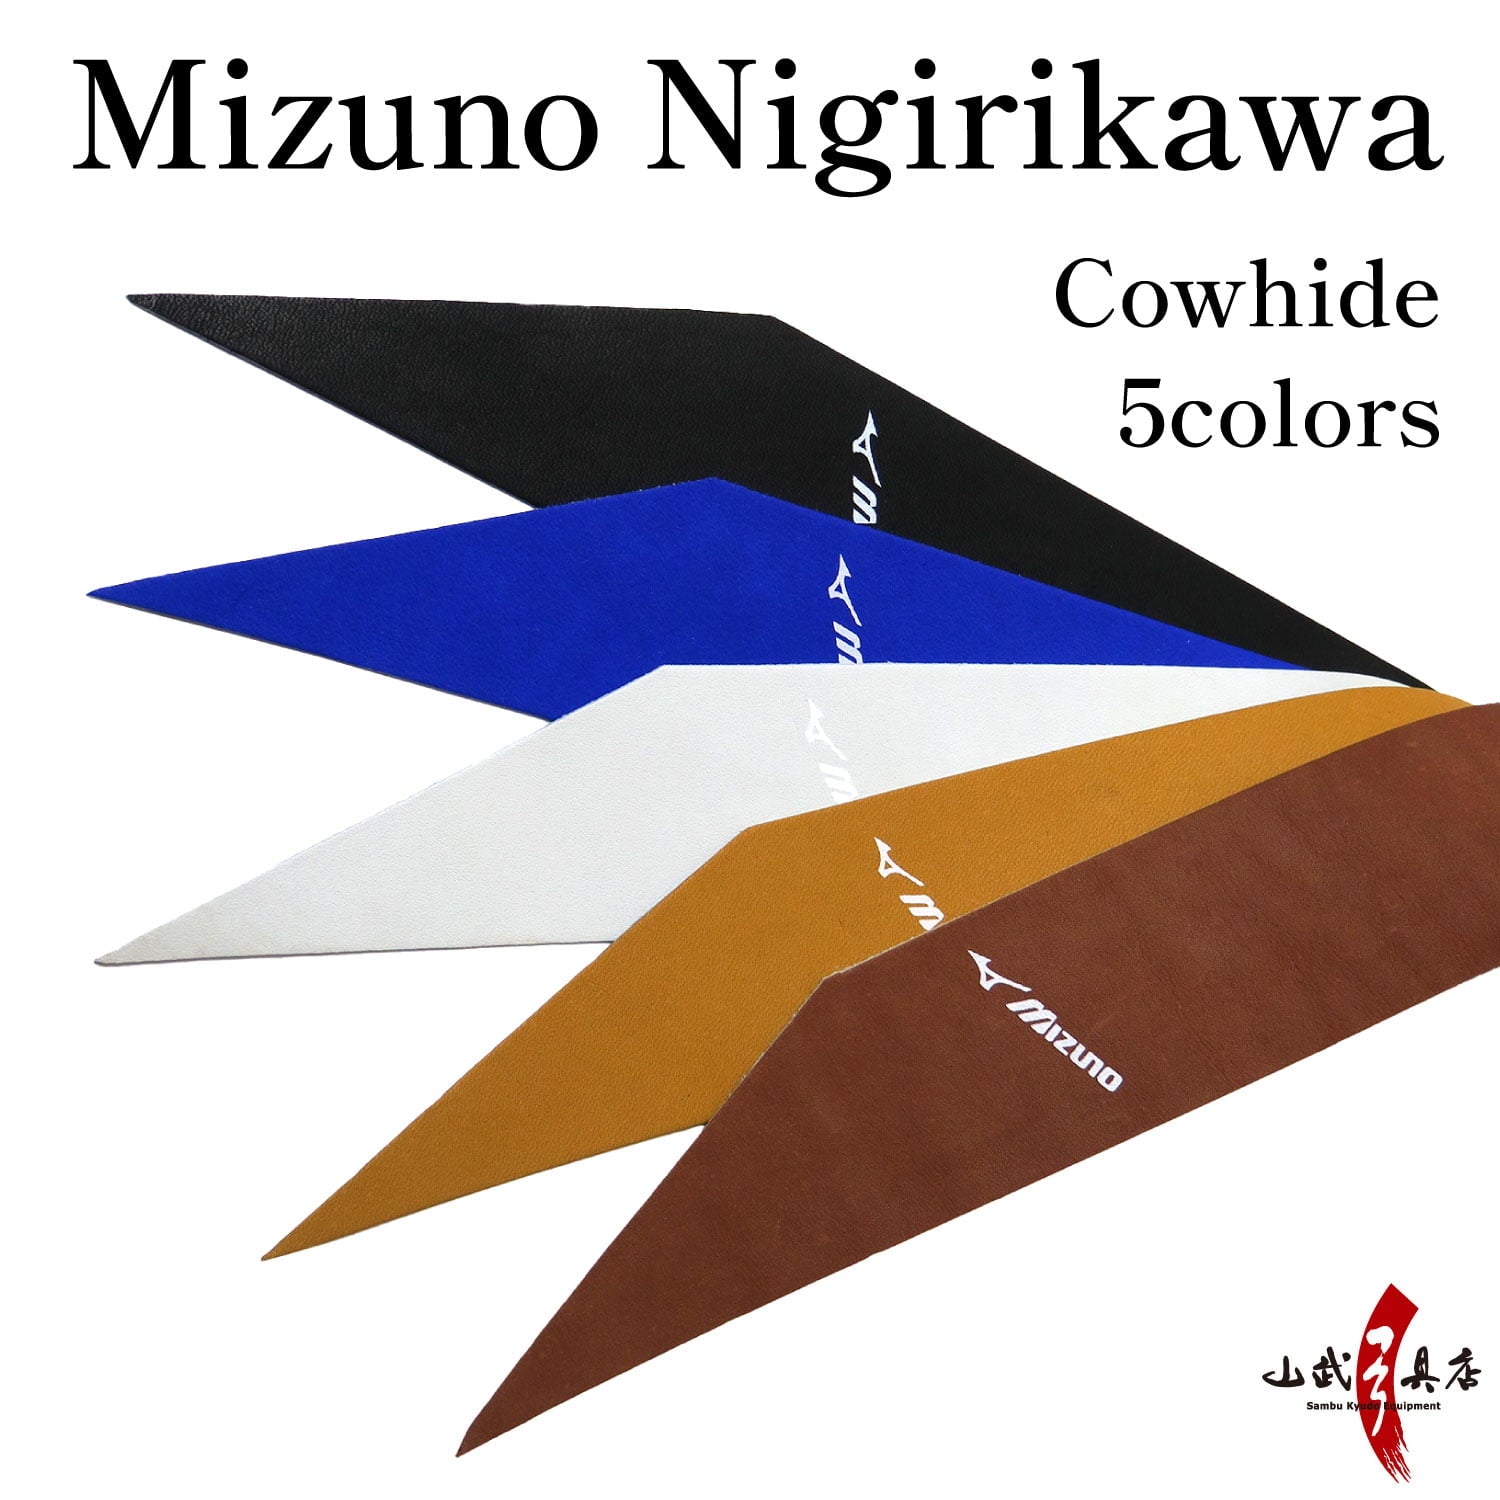 【F-387】Nigirikawa Mizuno Cowhide [All 5 colors] - 握り革 ミズノ製 牛革 全5色